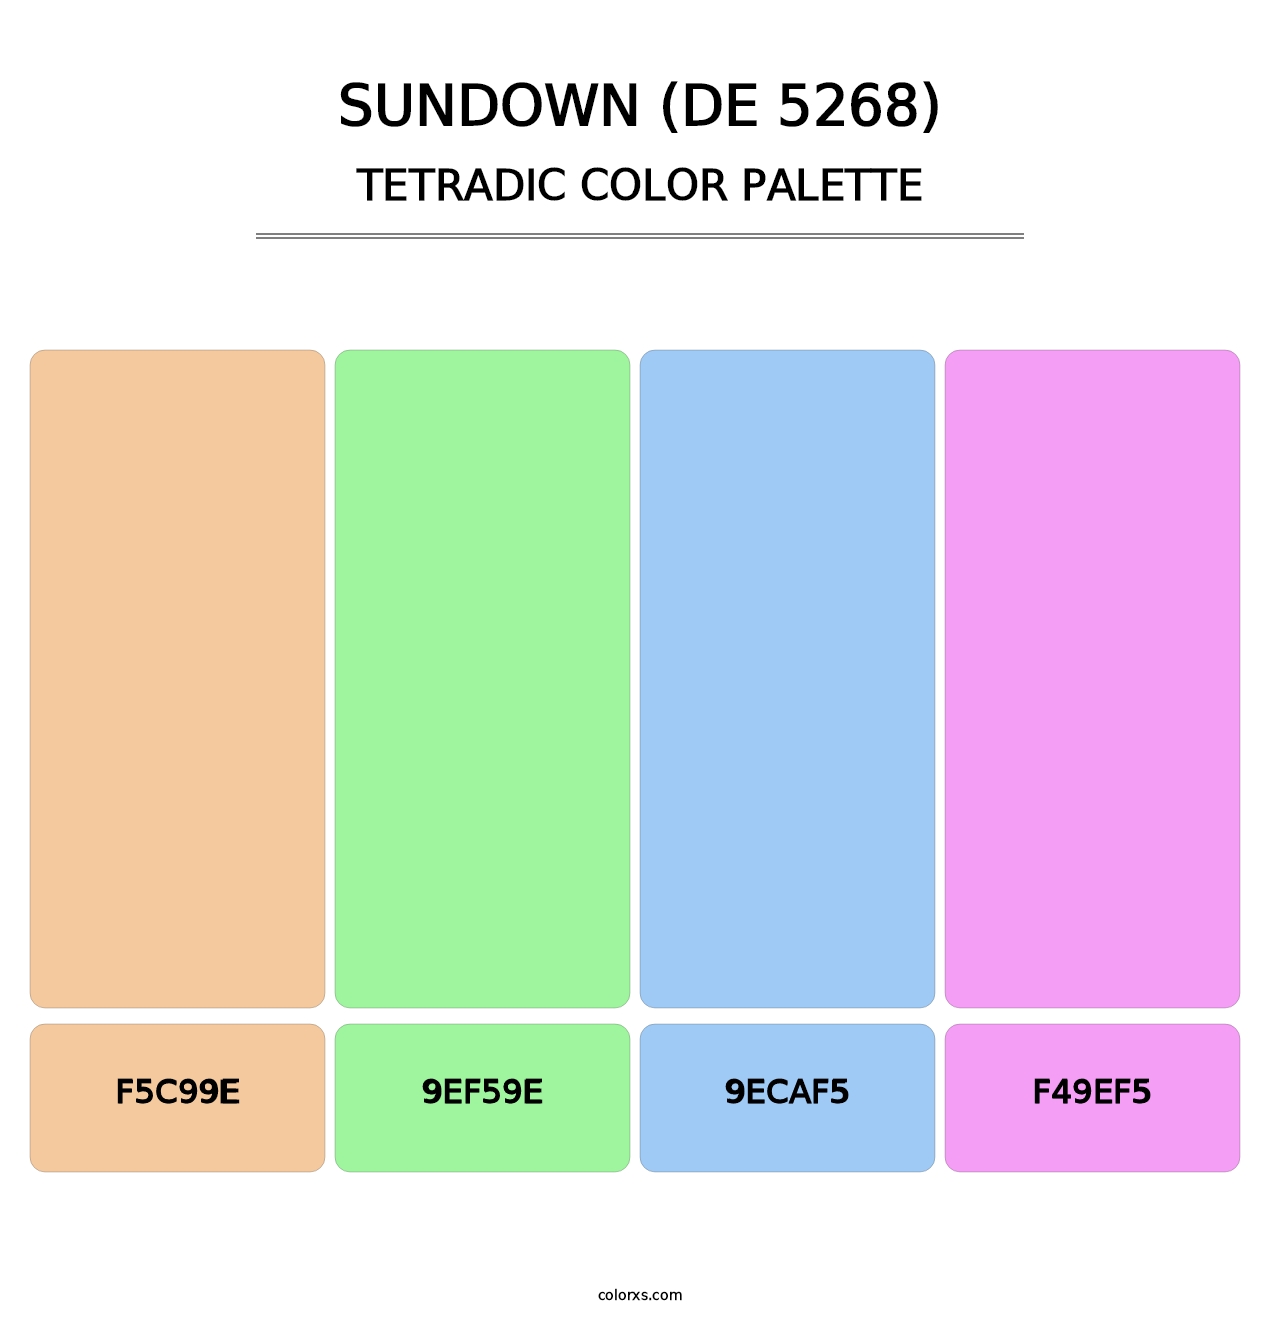 Sundown (DE 5268) - Tetradic Color Palette